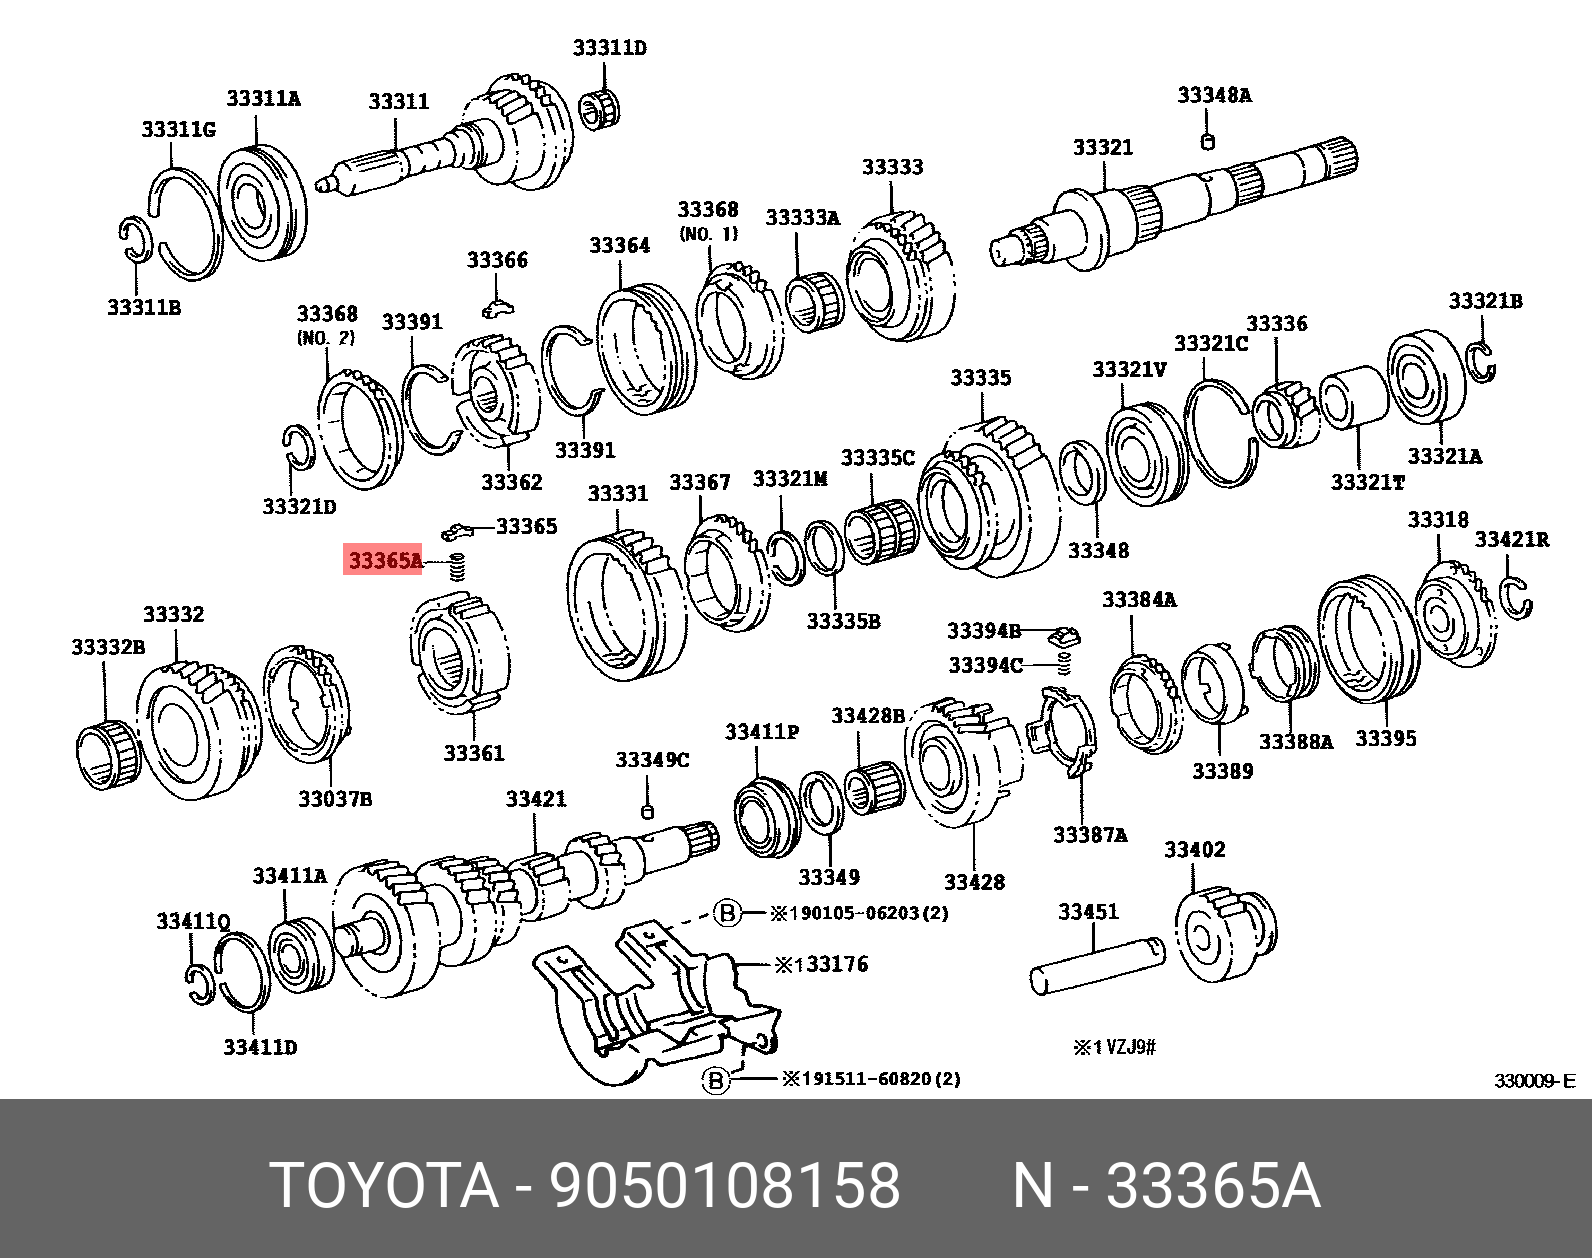 Пружинка фиксатора синхронизатора МКП - Toyota 90501-08158